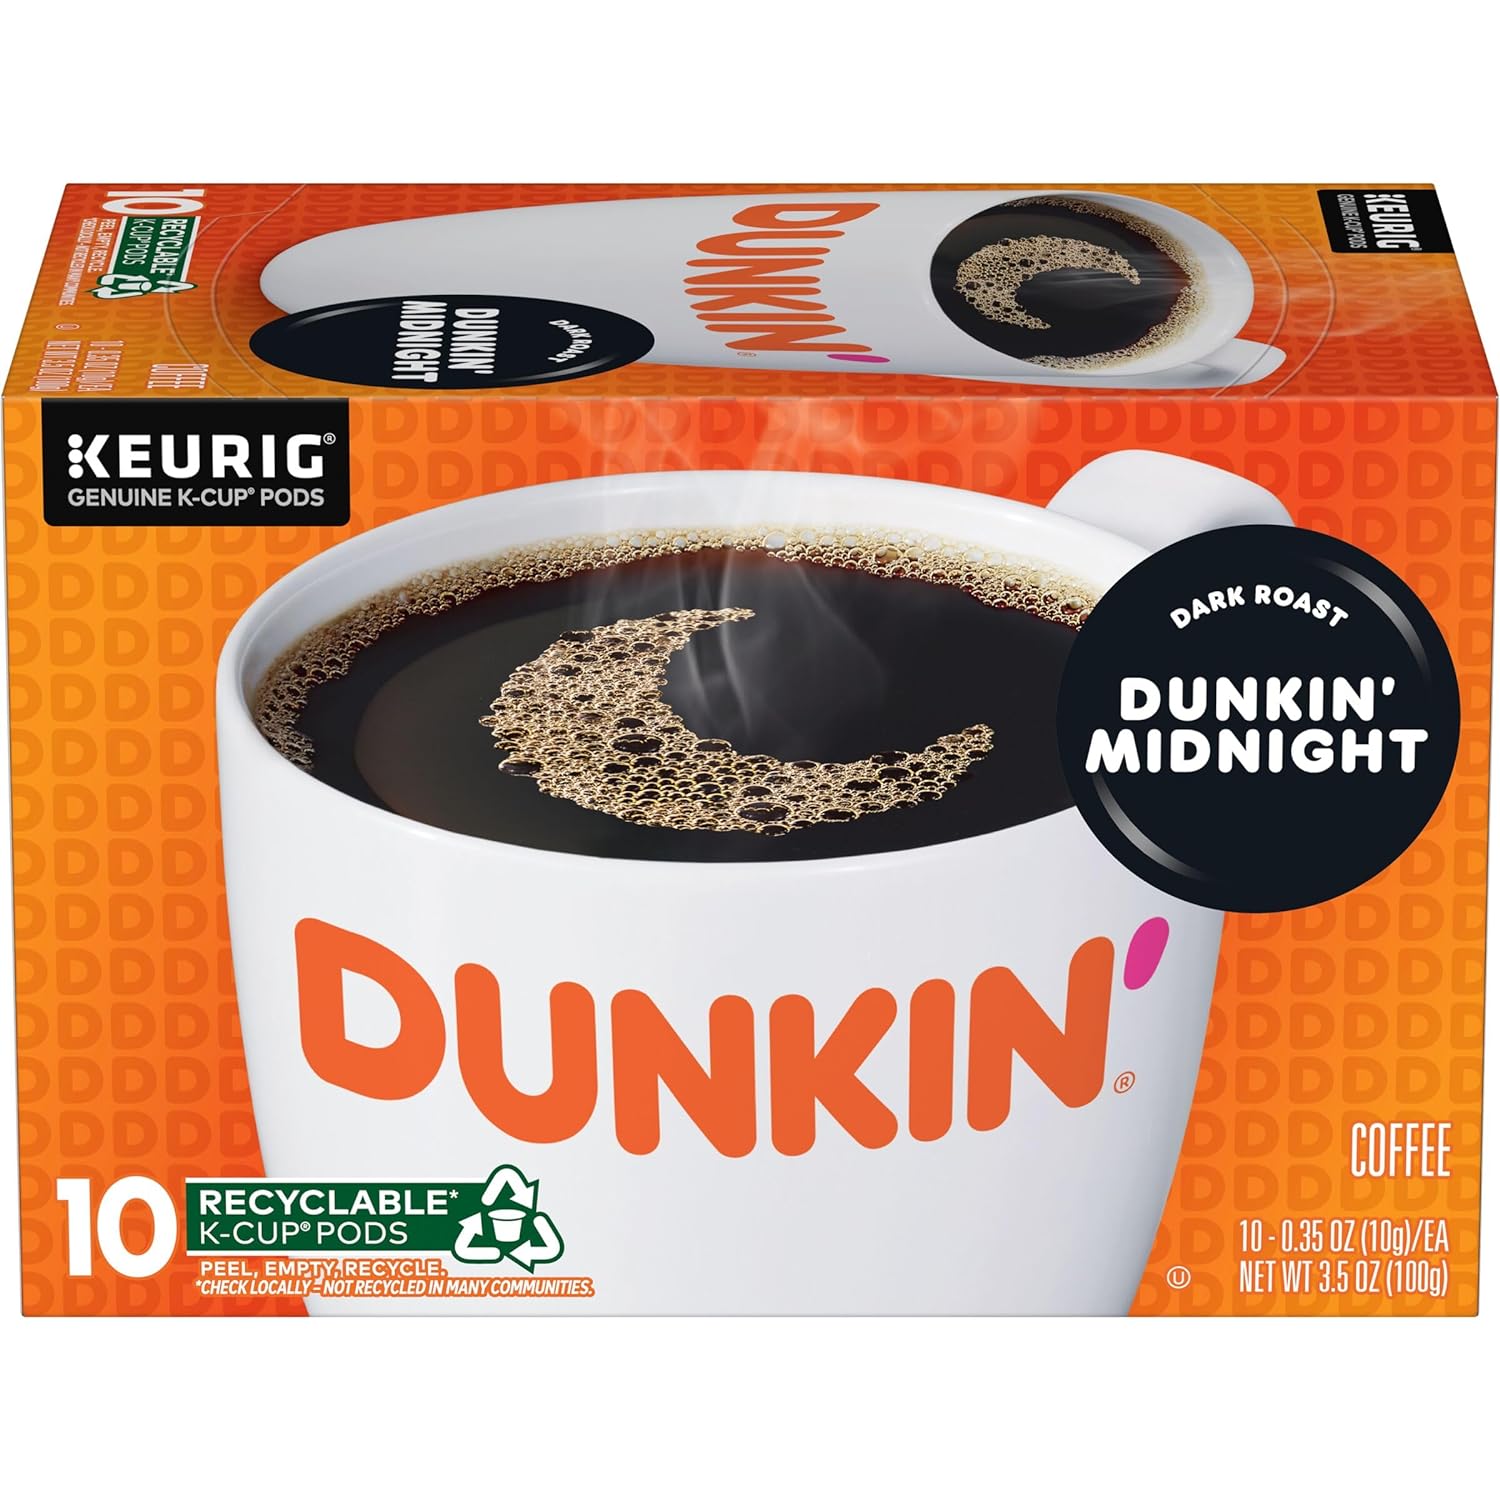 Dunkin Original Blend Medium Roast Coffee, 60 Keurig K-Cup Pods